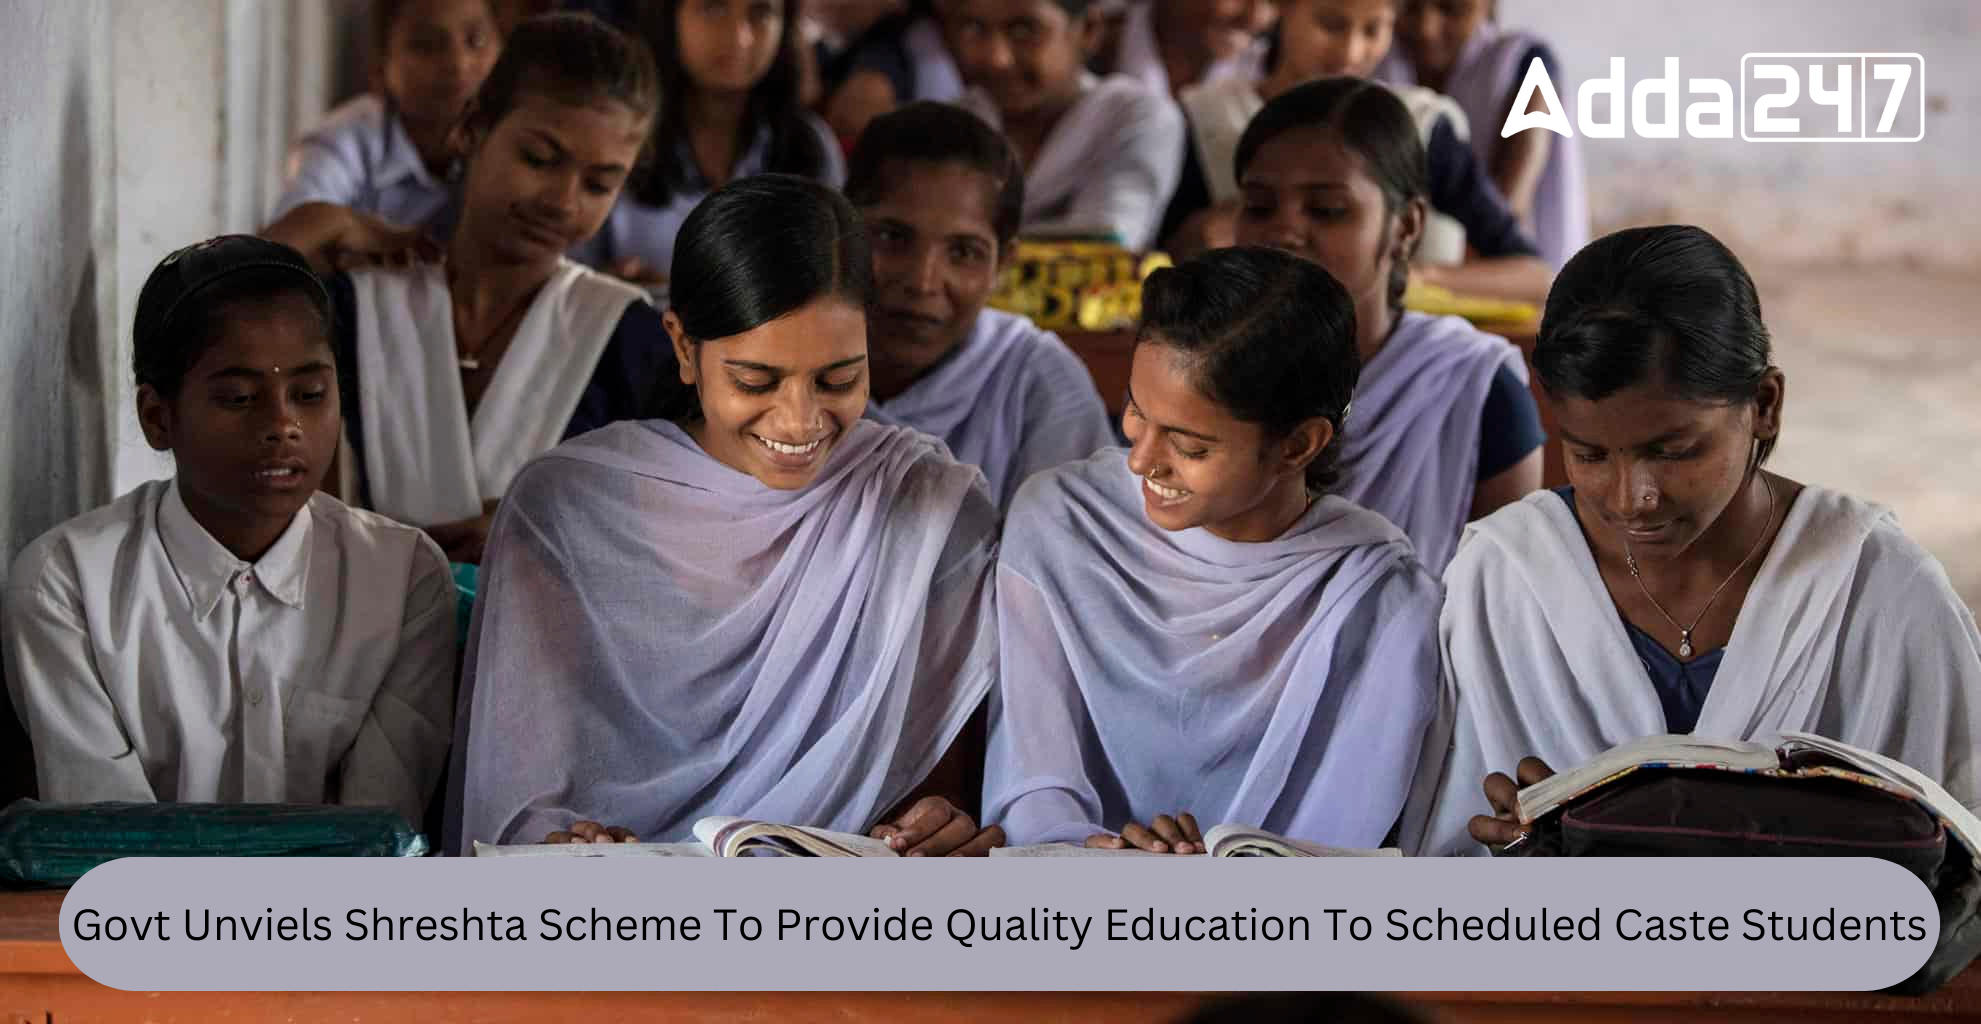 Govt Introduces Shreshta Scheme For Quality Education Of Scheduled Caste Students